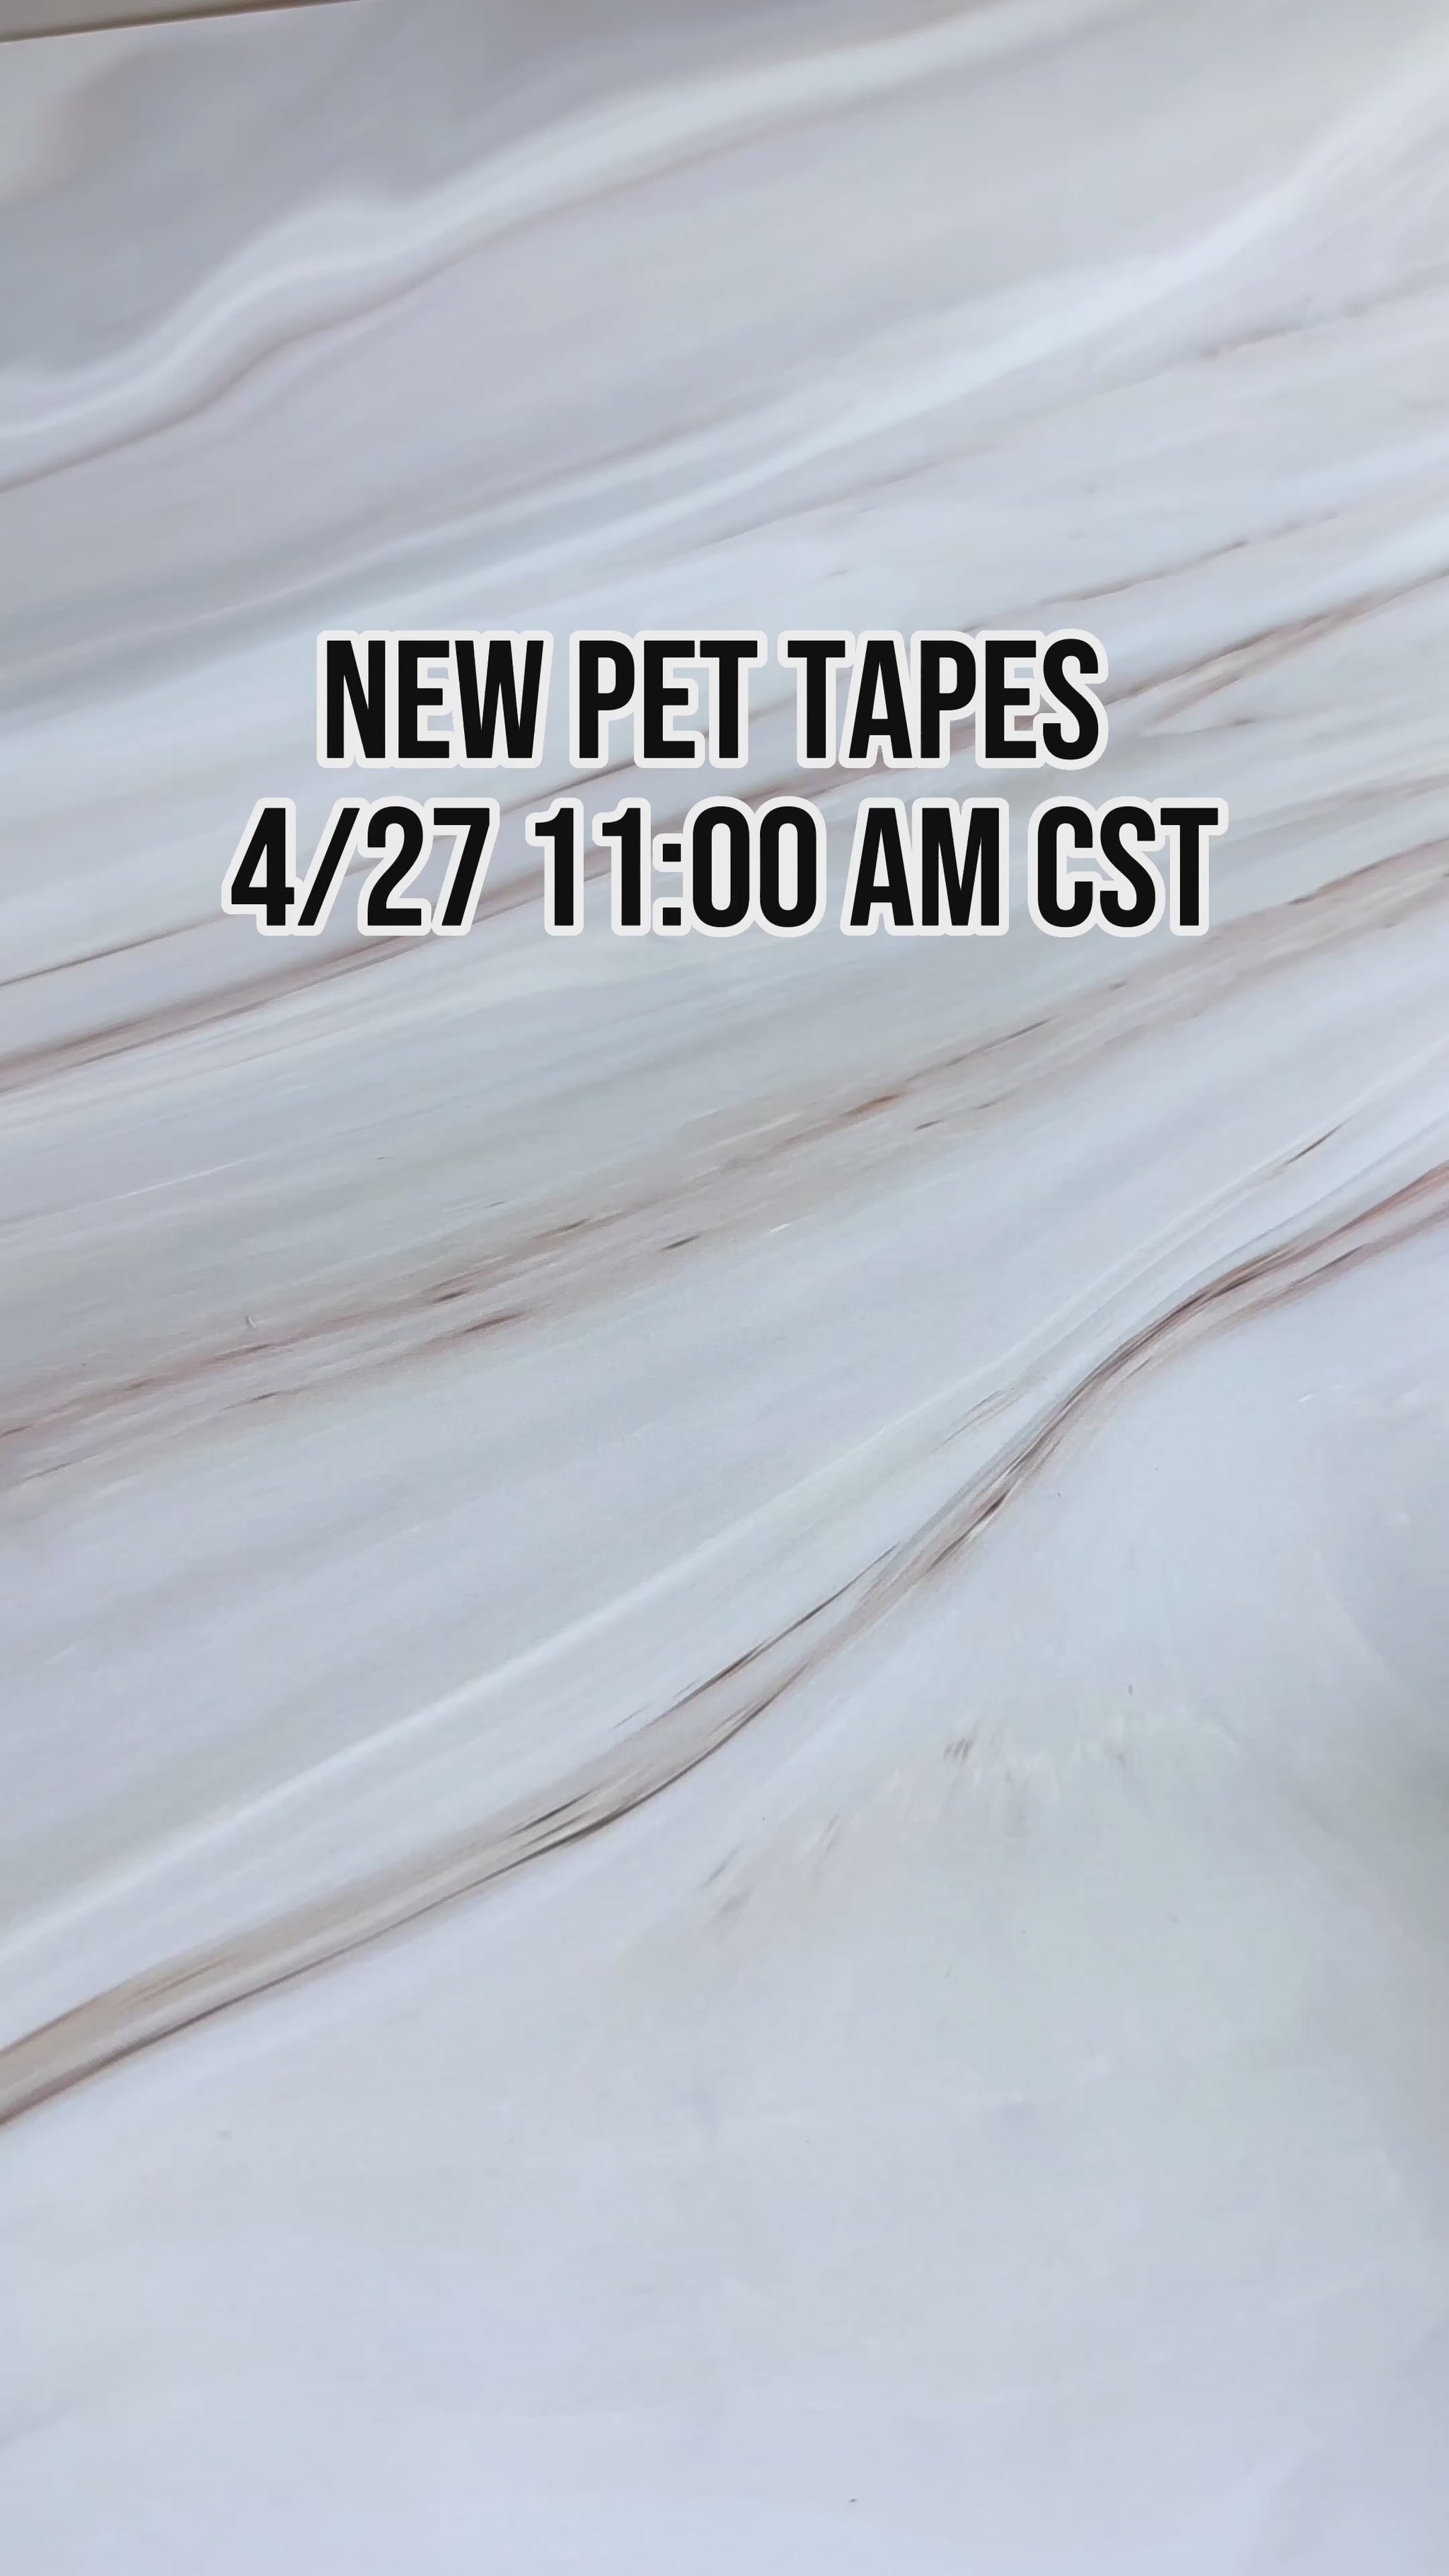 Dog PET Tape - Shop Rongrong - Rongrong DeVoe